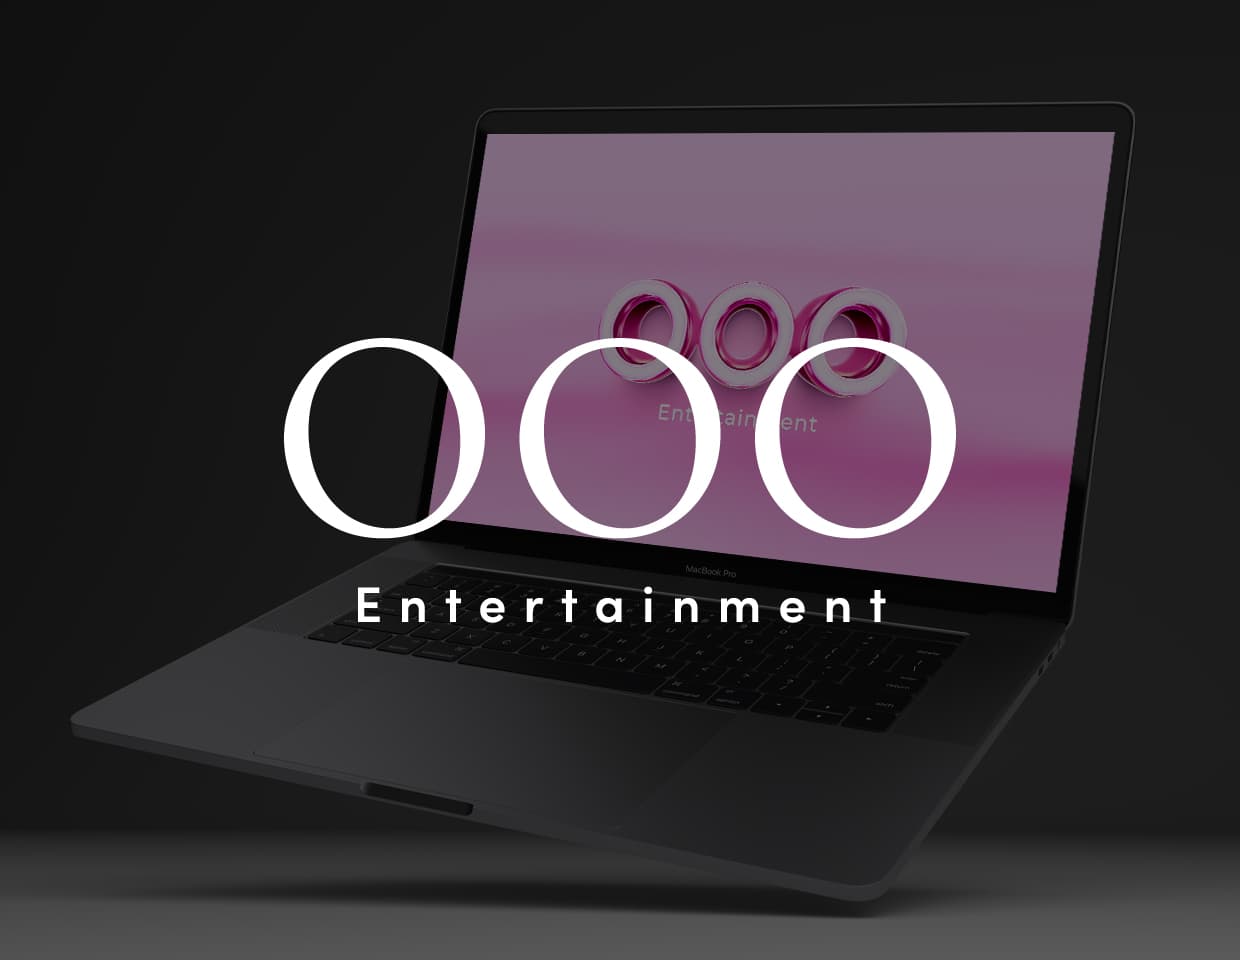 OOO Entertainment